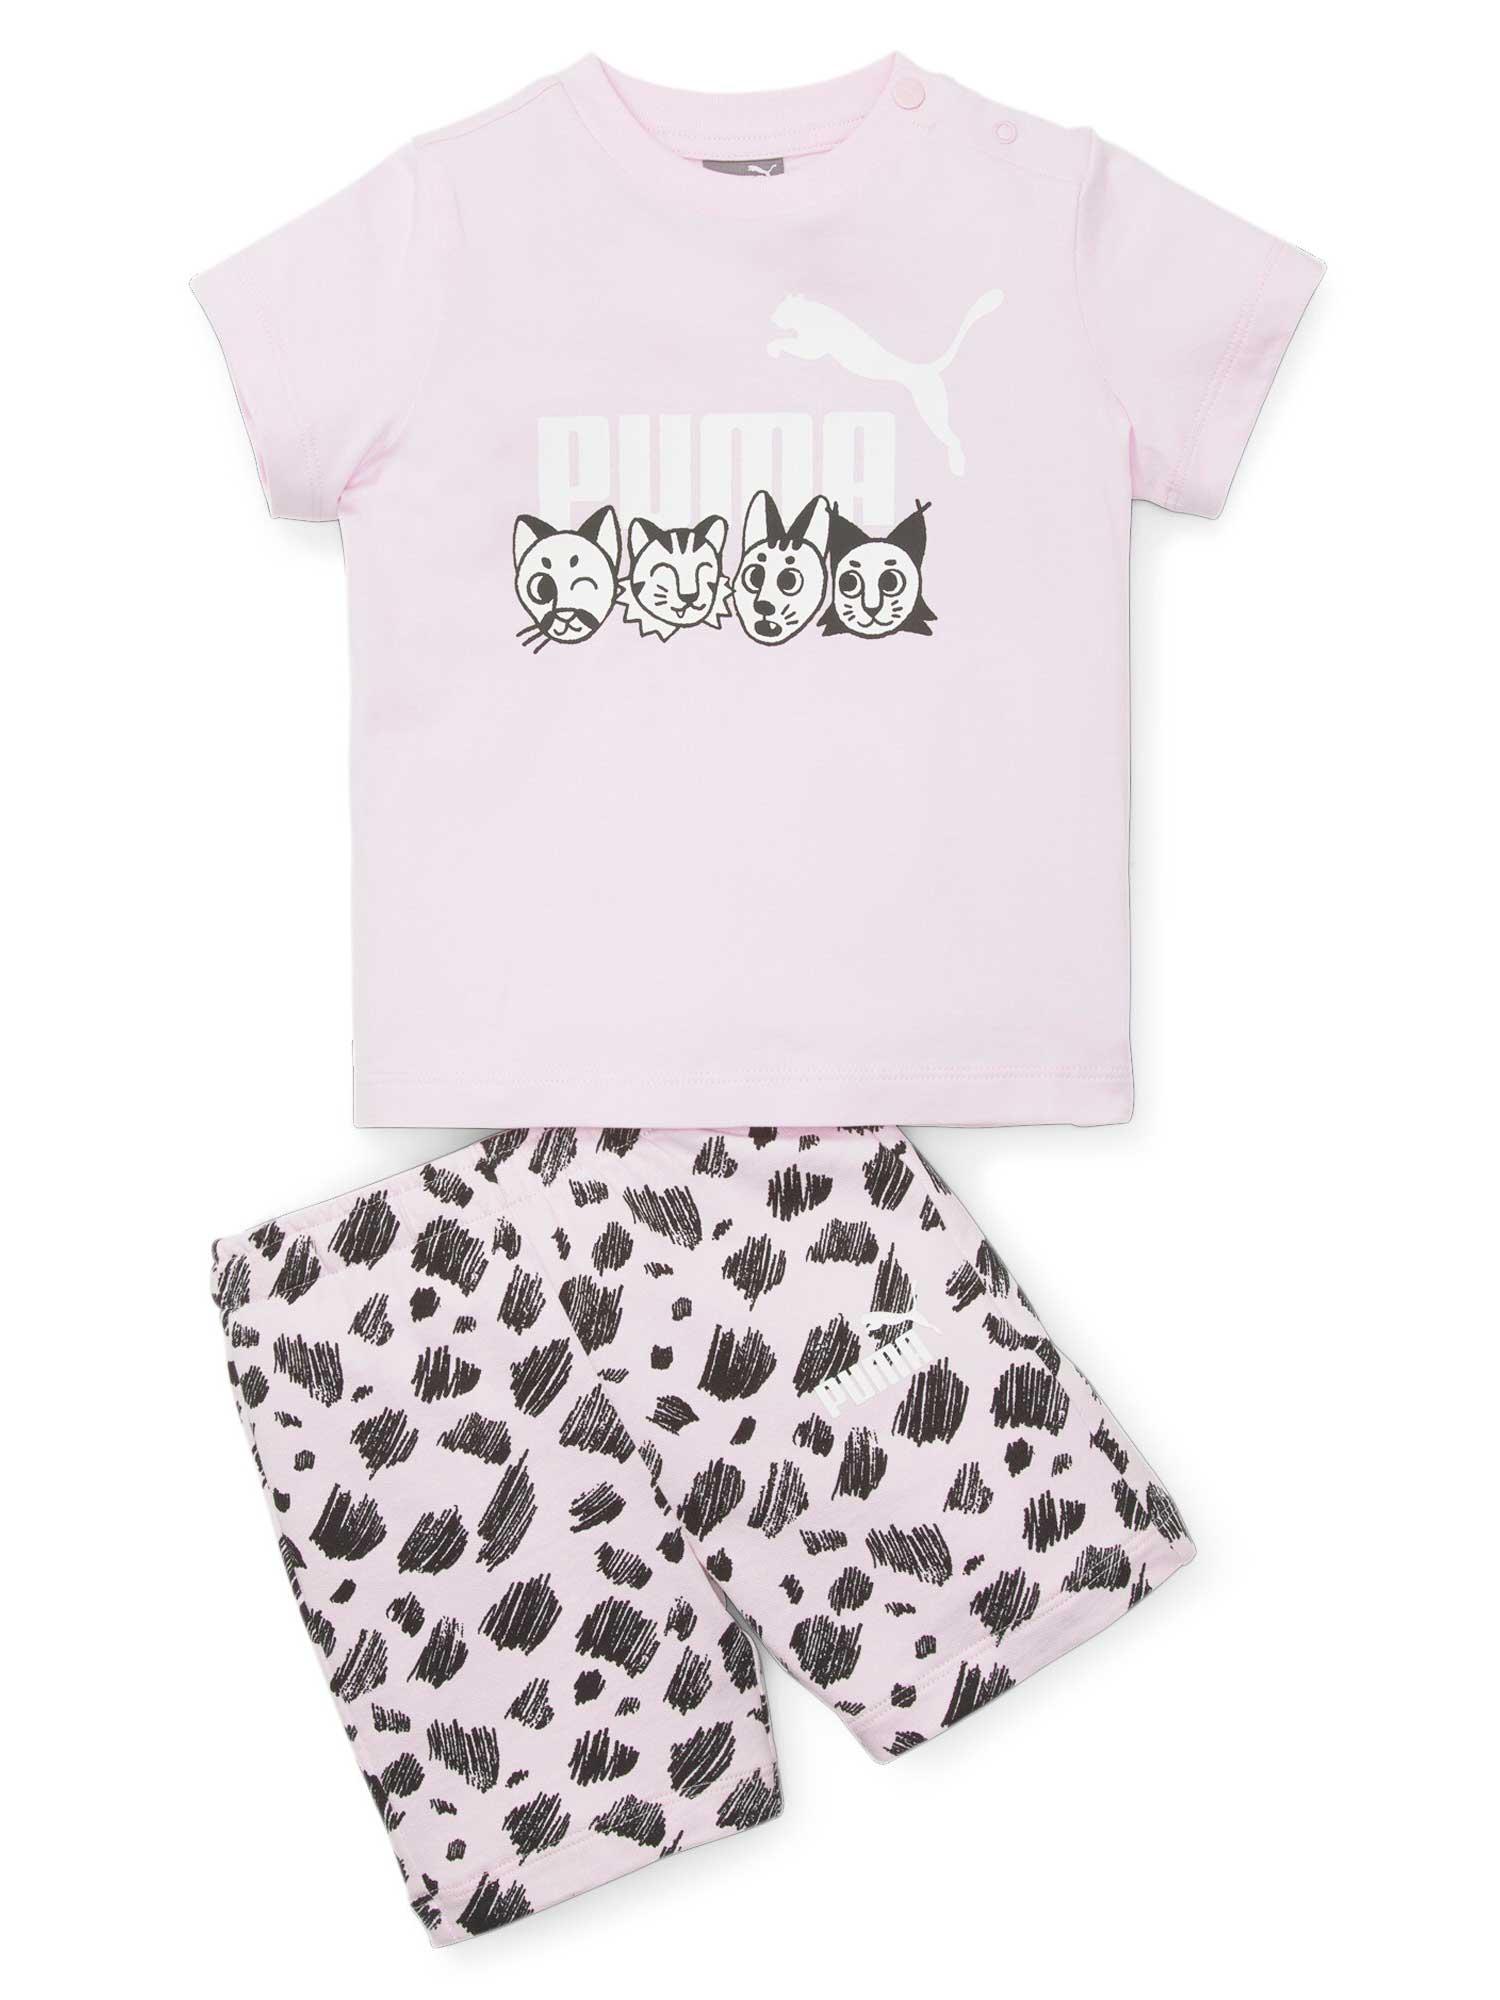 Selected image for PUMA Majica i šorts za devojčice ESS+ MATES Infants bebi roze